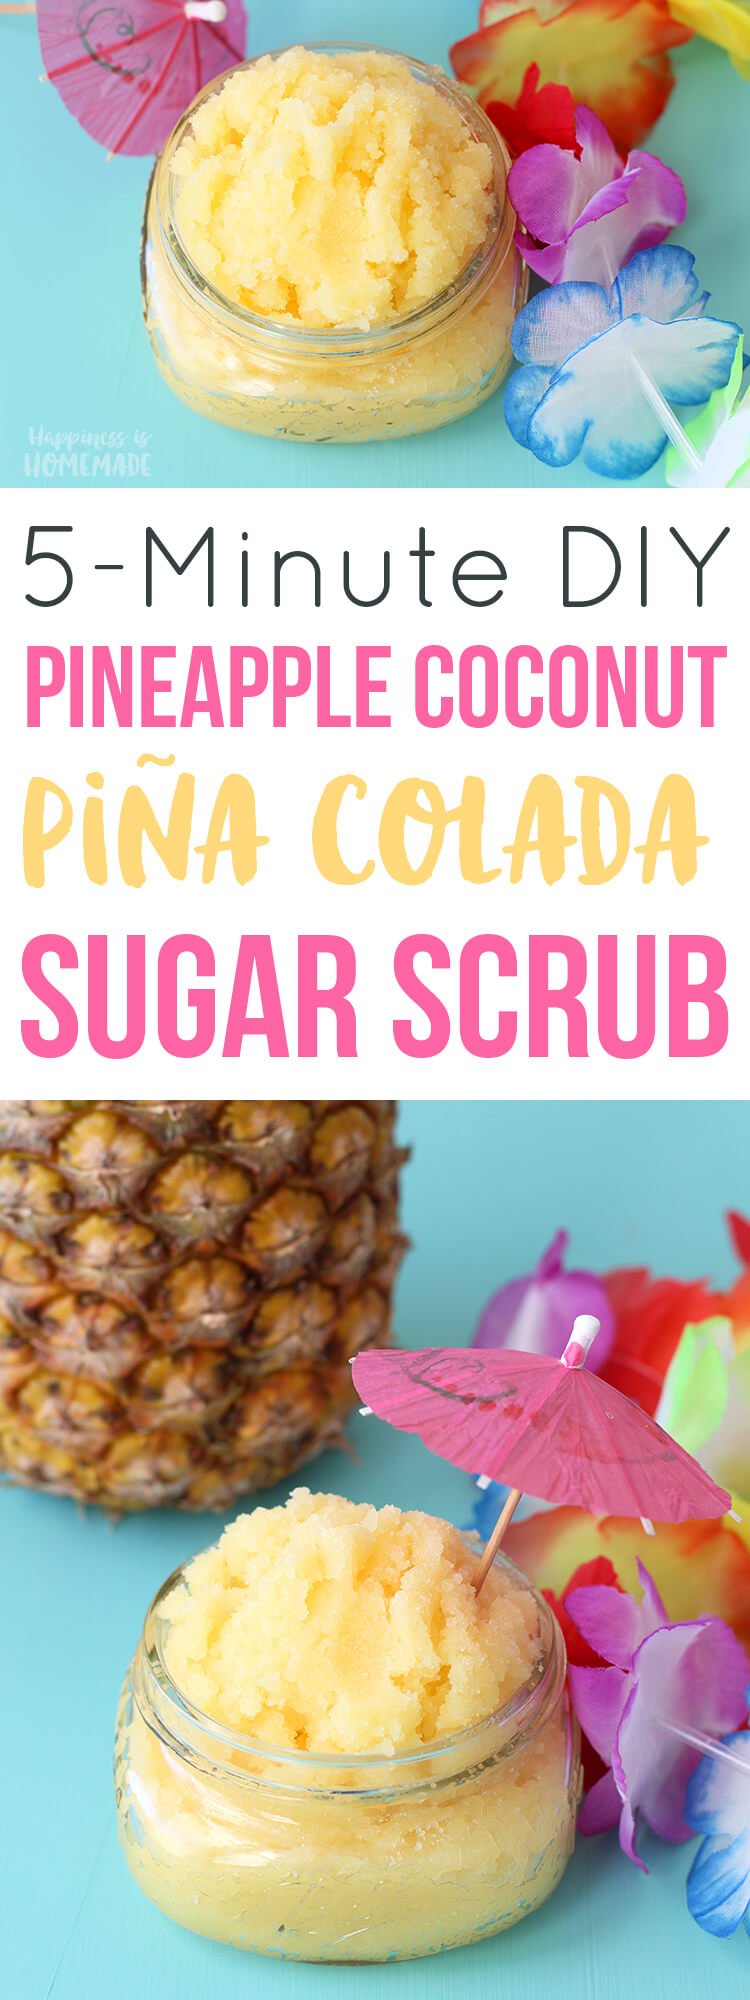 5 Minute DIY Pineapple Coconut Pina Colada Sugar Scrub